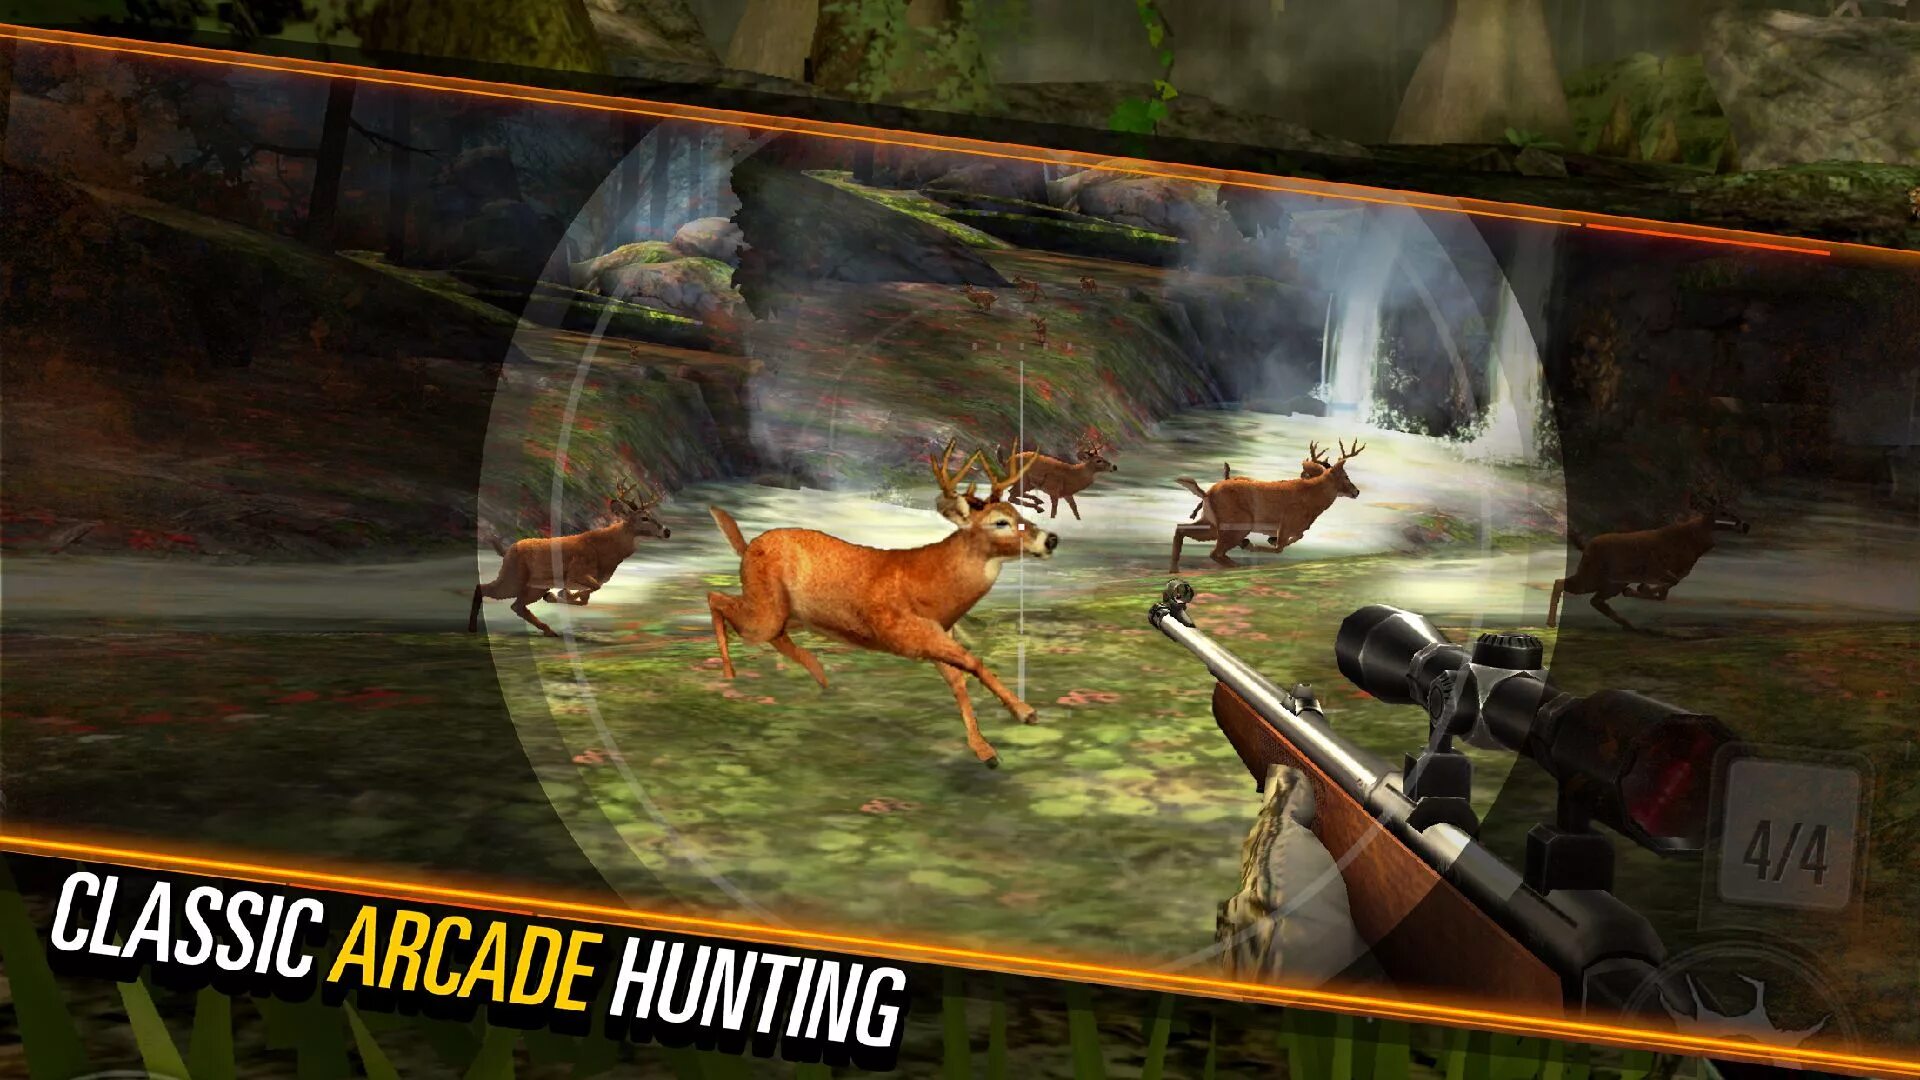 Перевести на русский hunting. Игра Deer Hunter 2014. Симулятор охоты Deer Hunter. Игра Sniper Deer Hunting 2014. Мобильная игра Deer Hunter 2014.